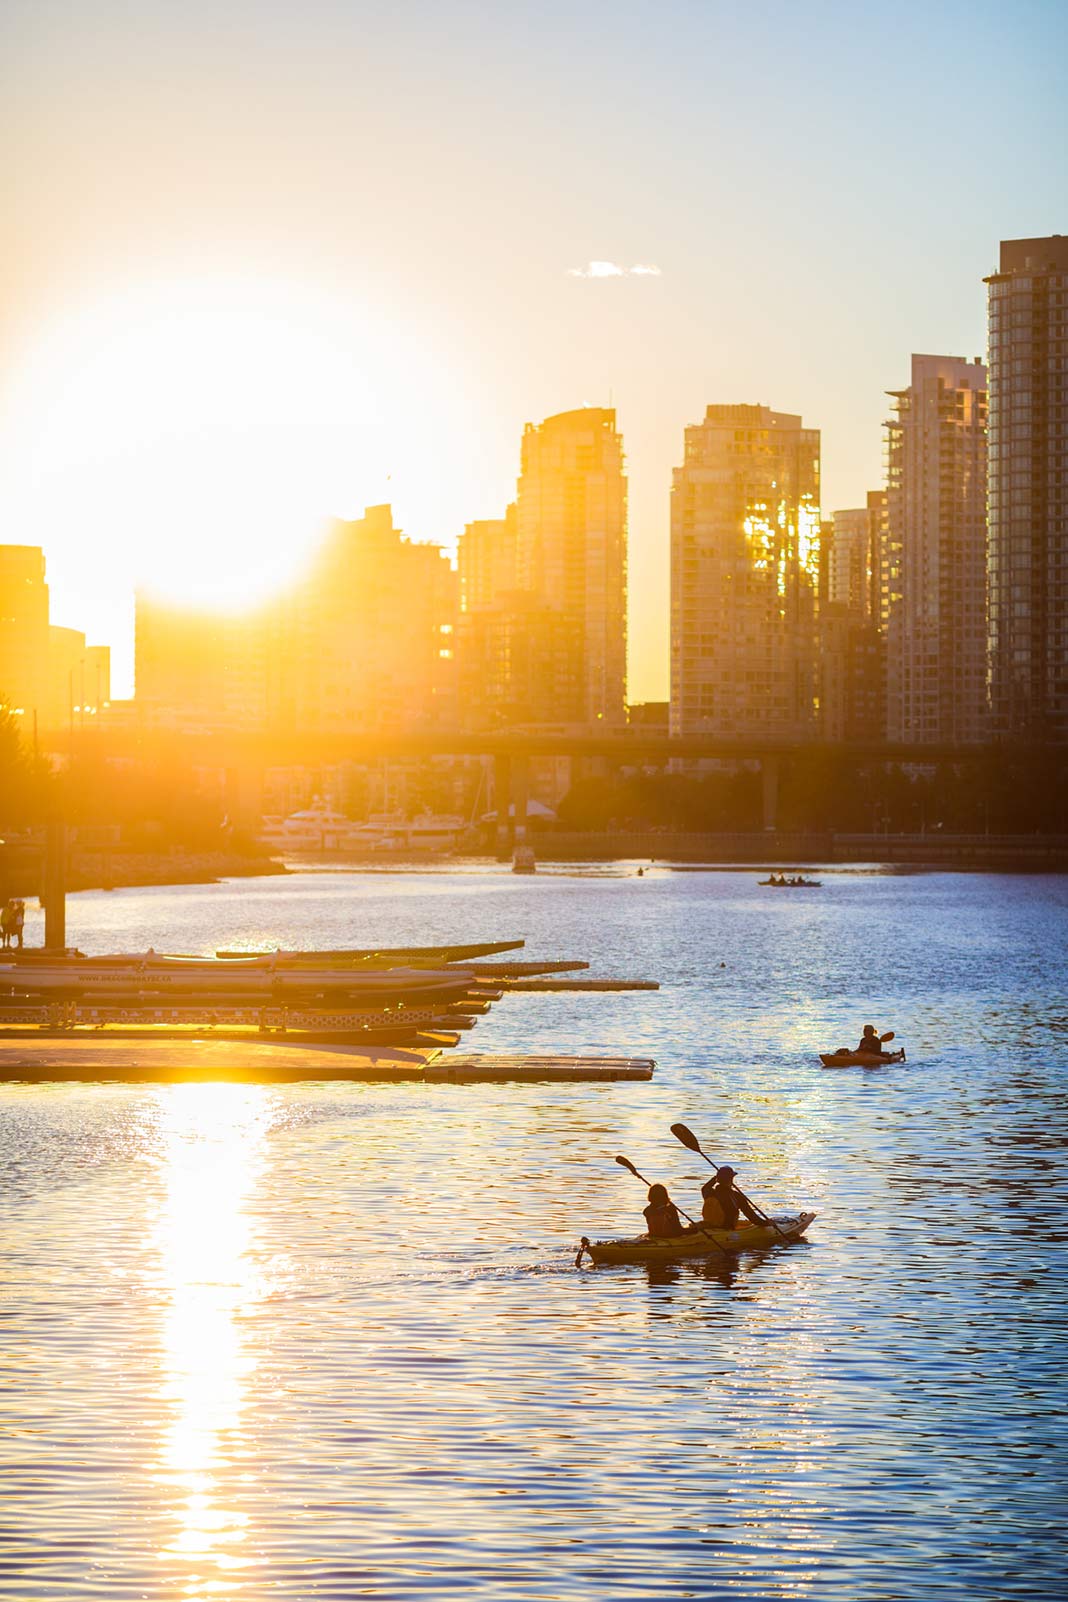 Kayakers paddling towards the city sunset